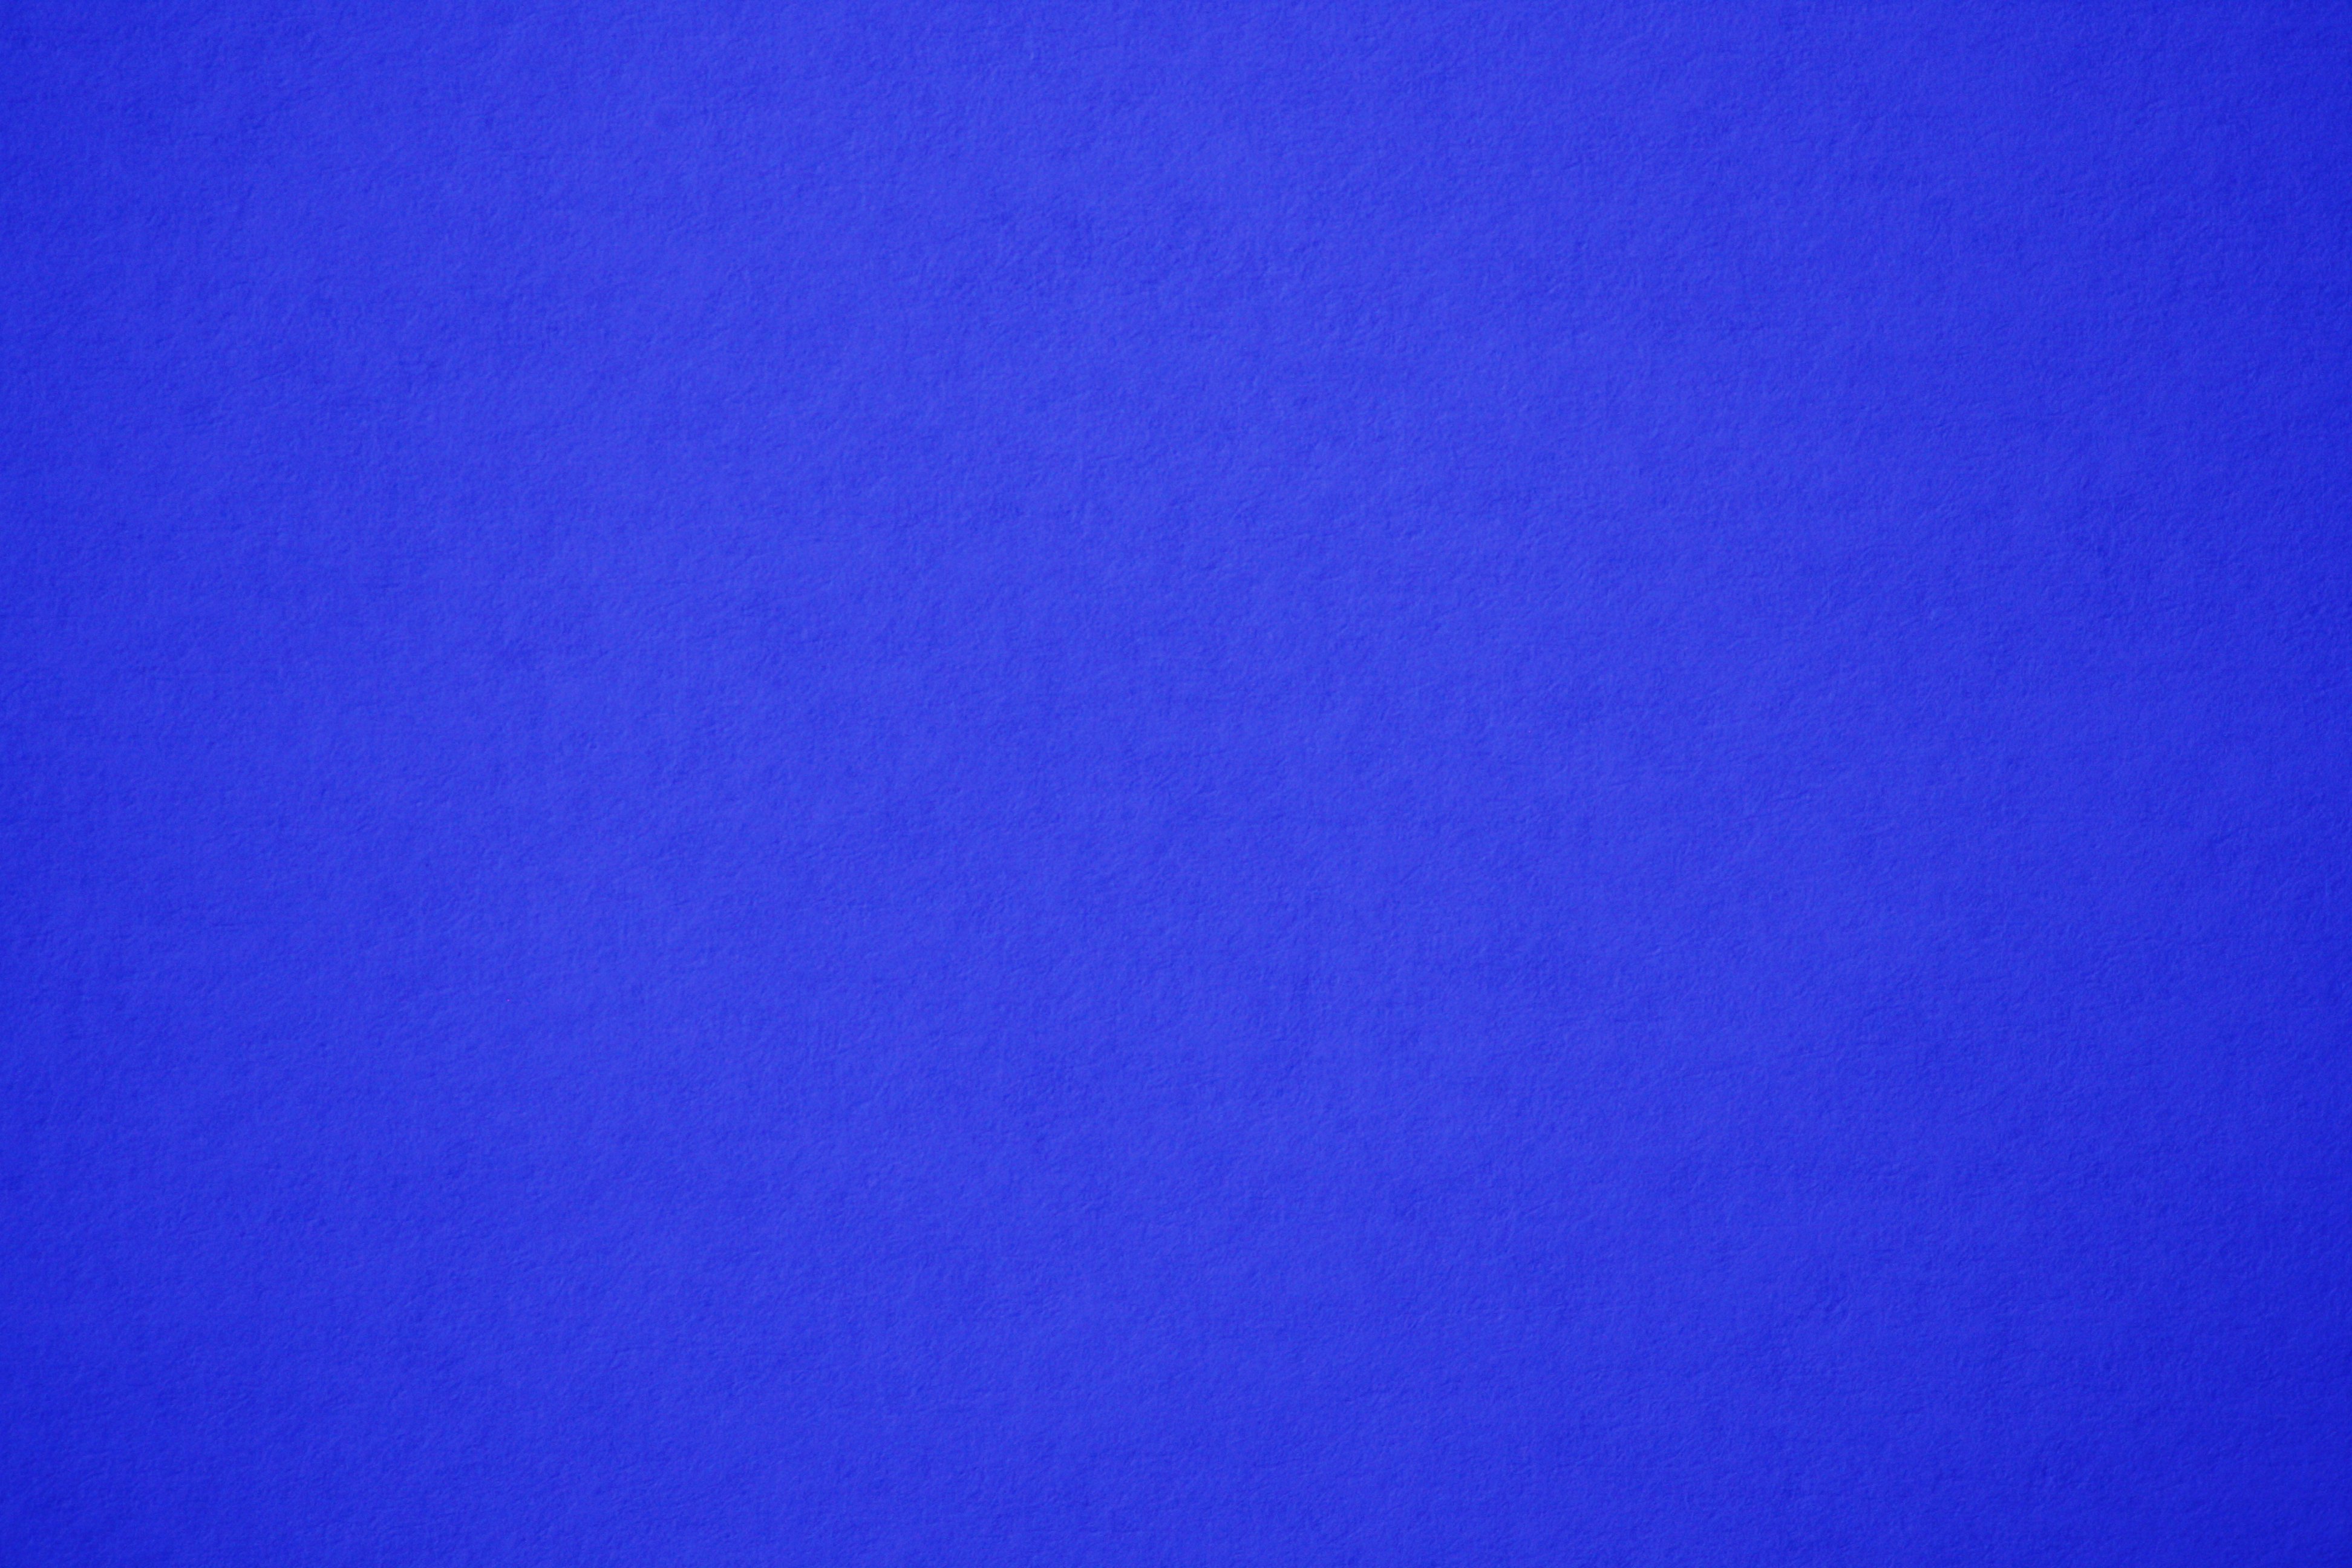 Blue Paper Texture Picture, Free Photograph